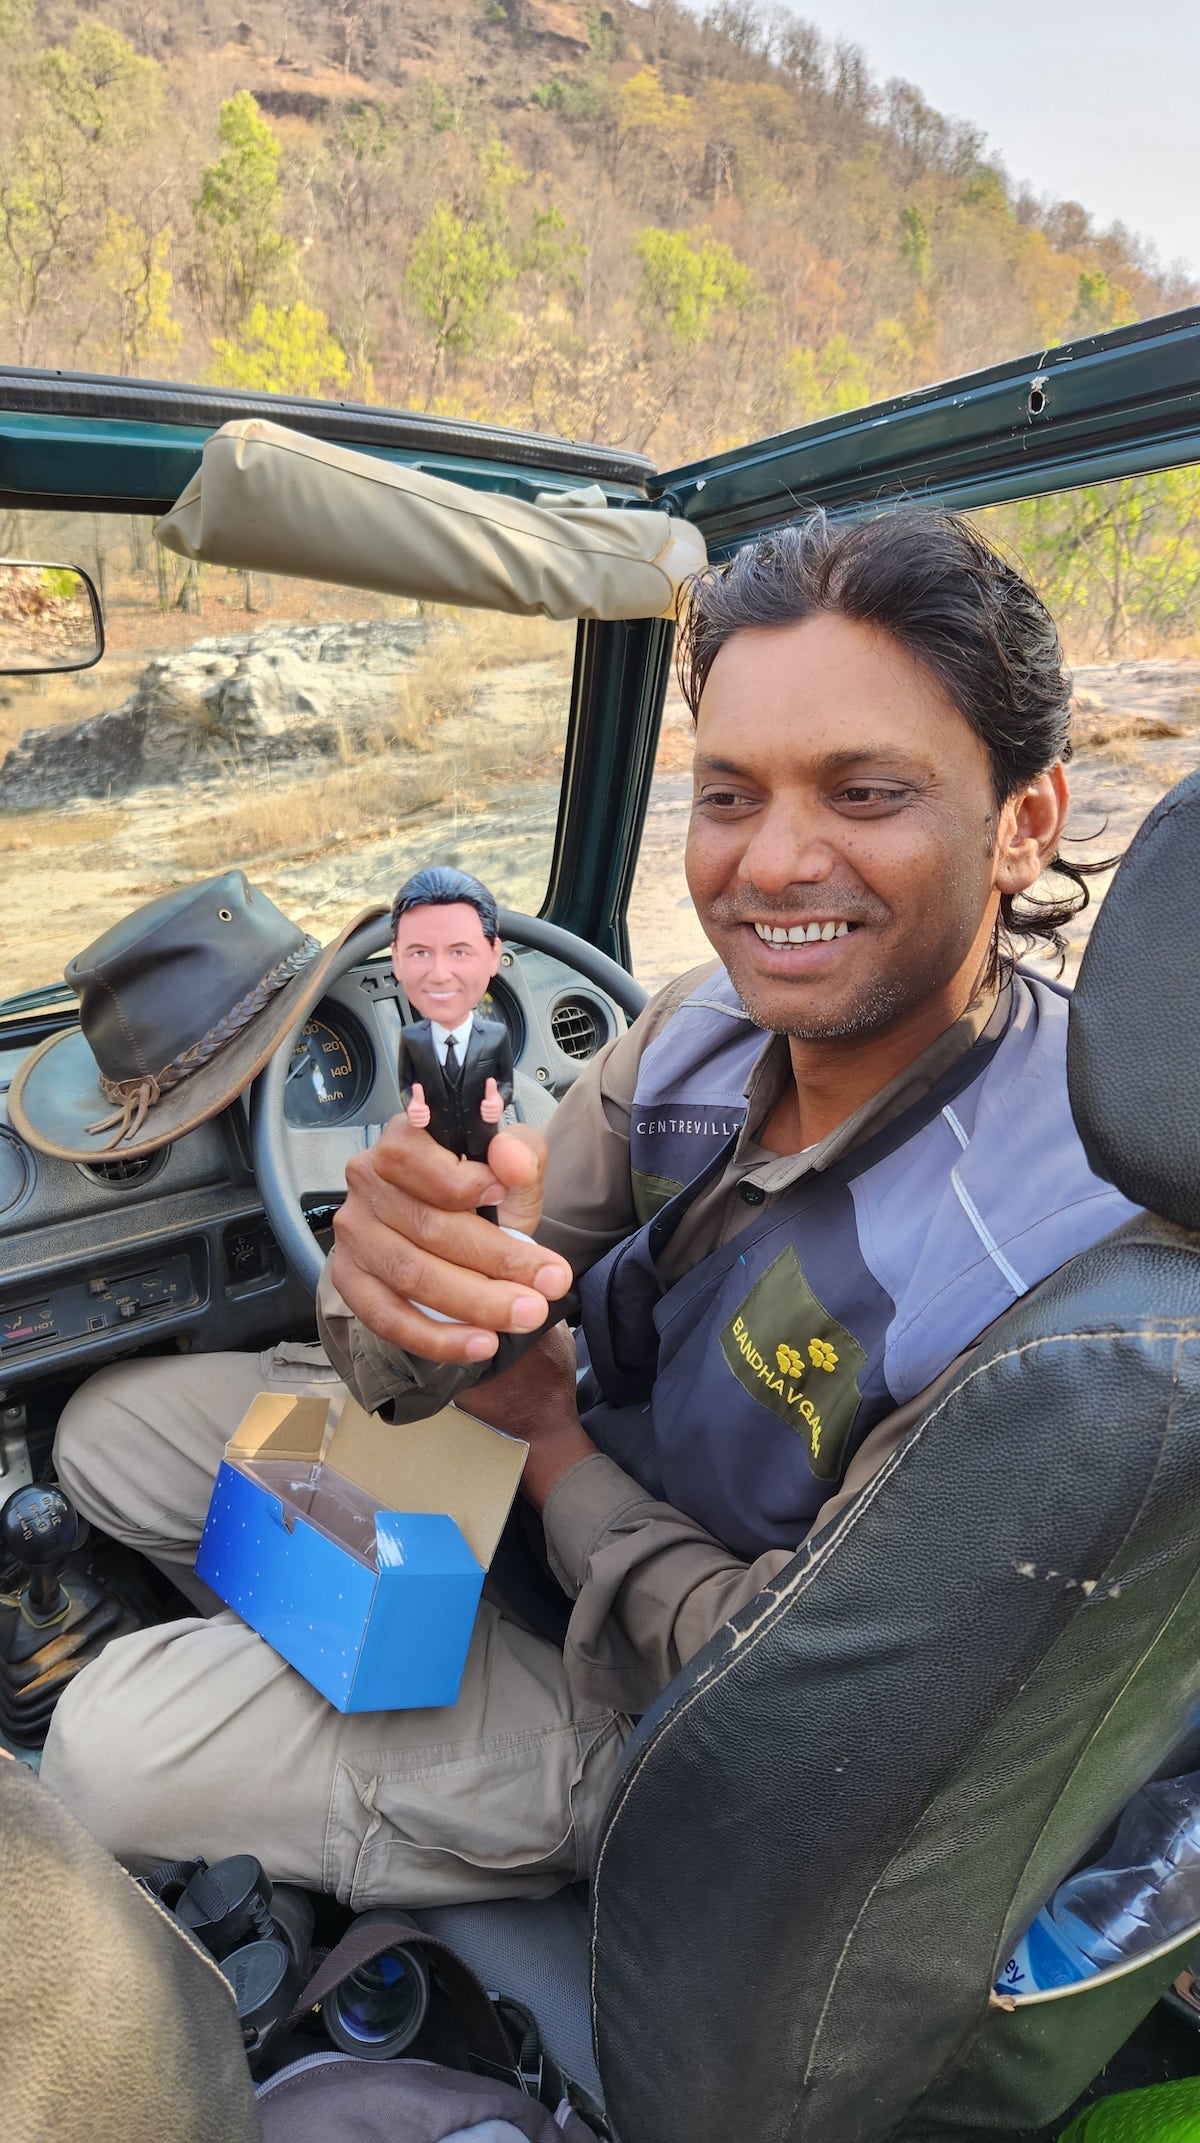 Little Jimmy exploring Bandavgarh National Park in India!